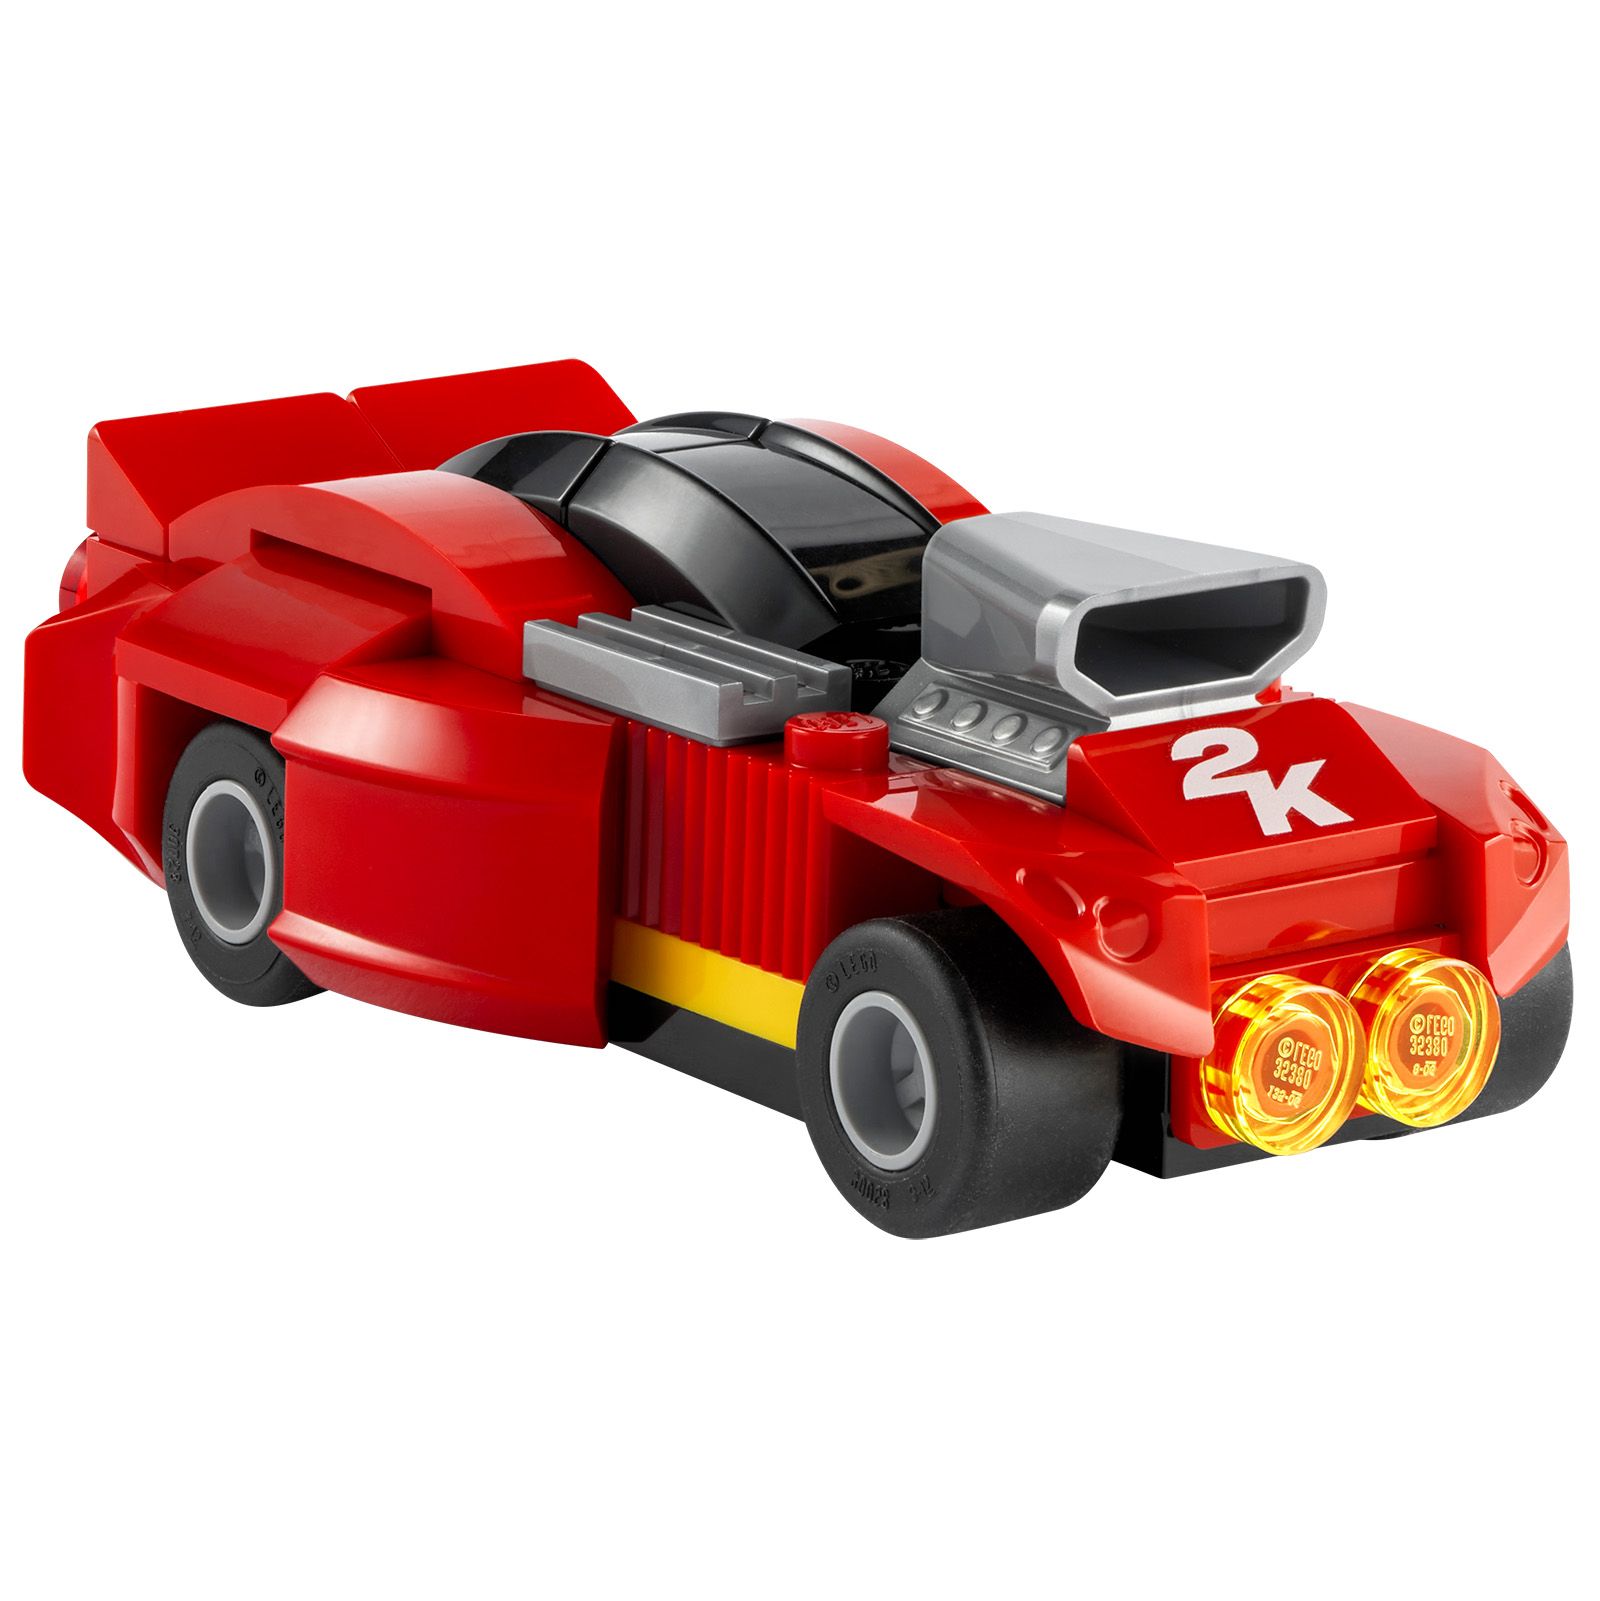 LEGO 2K ড্রাইভ: একটি ট্রেলার এবং একটি LEGO পণ্য যা ভিডিও গেমের নির্দিষ্ট ভার্সন সহ অফার করা হয়েছে